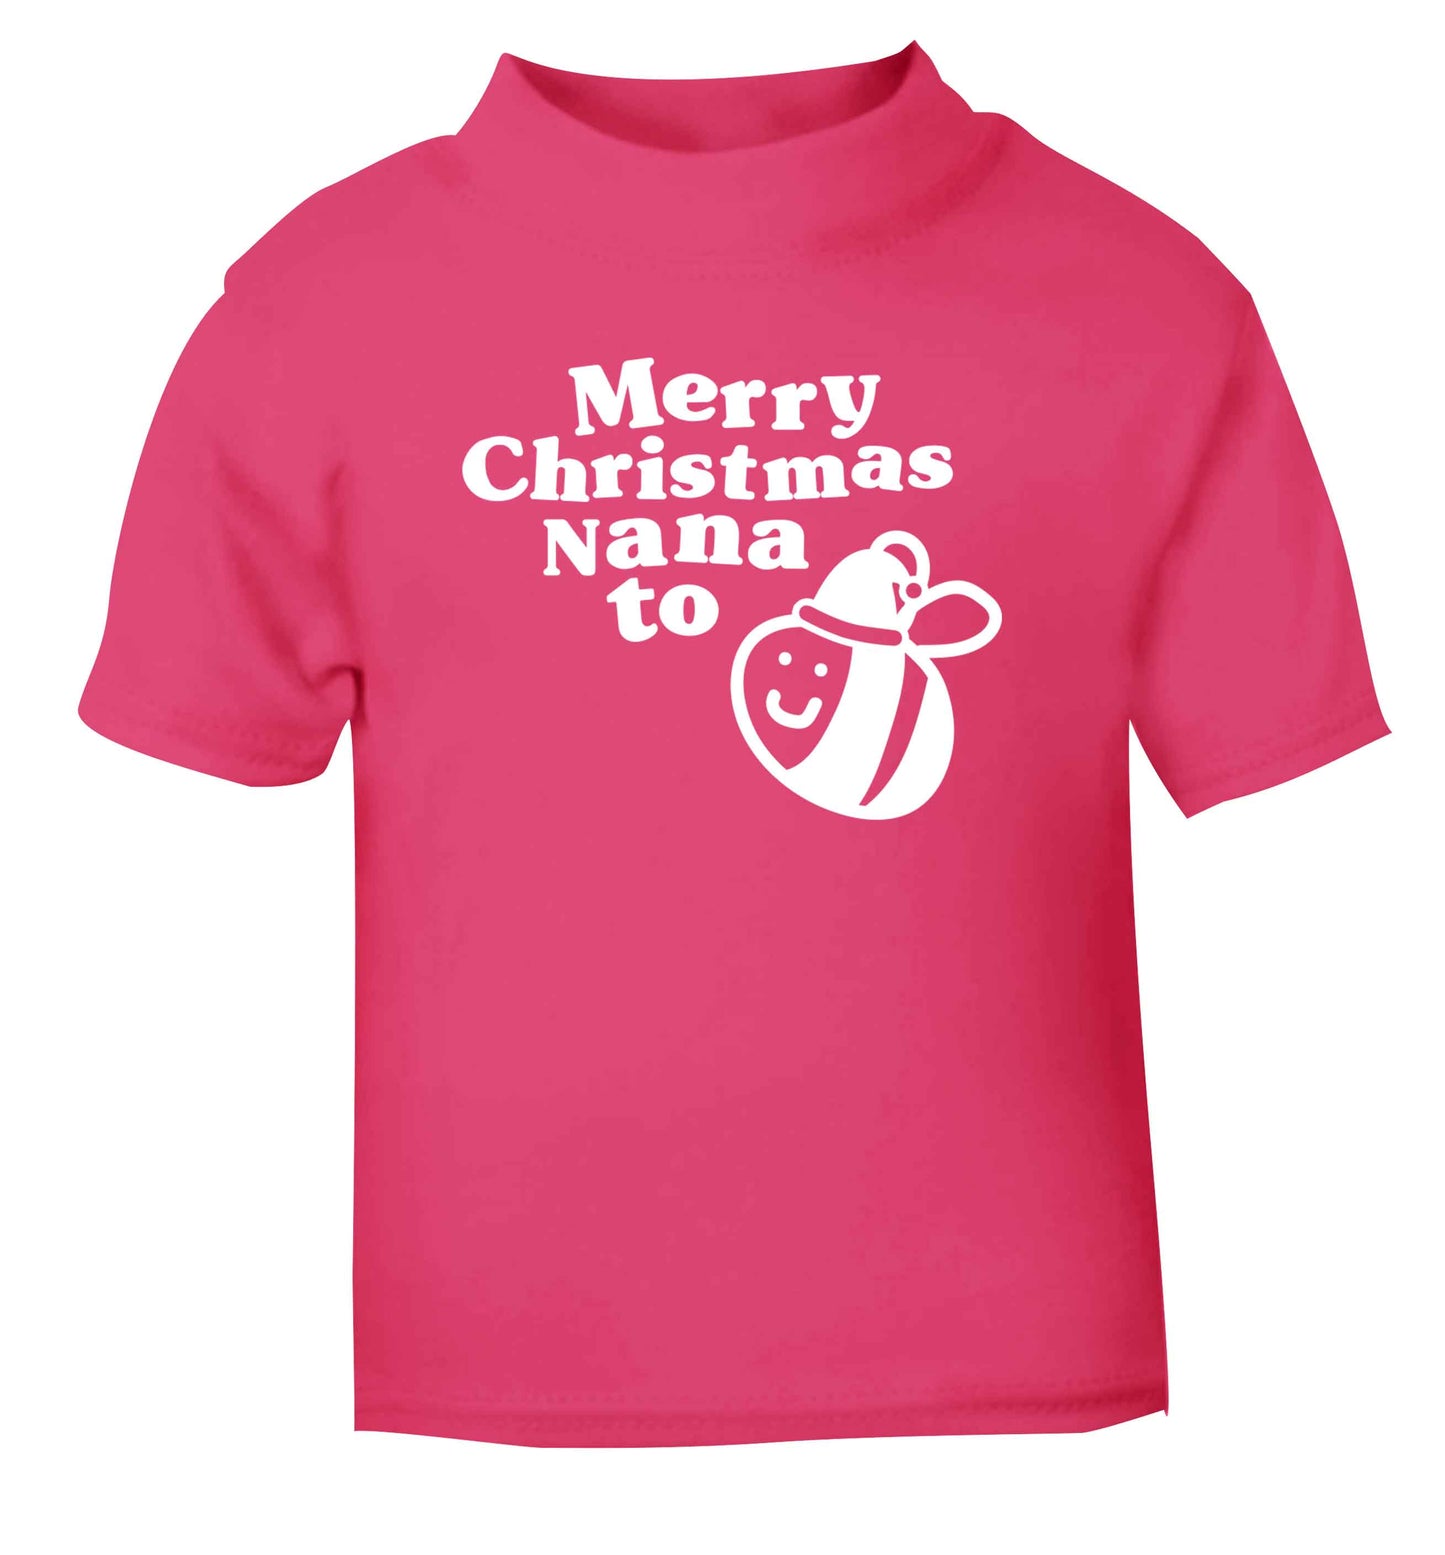 Merry Christmas nana to be pink Baby Toddler Tshirt 2 Years